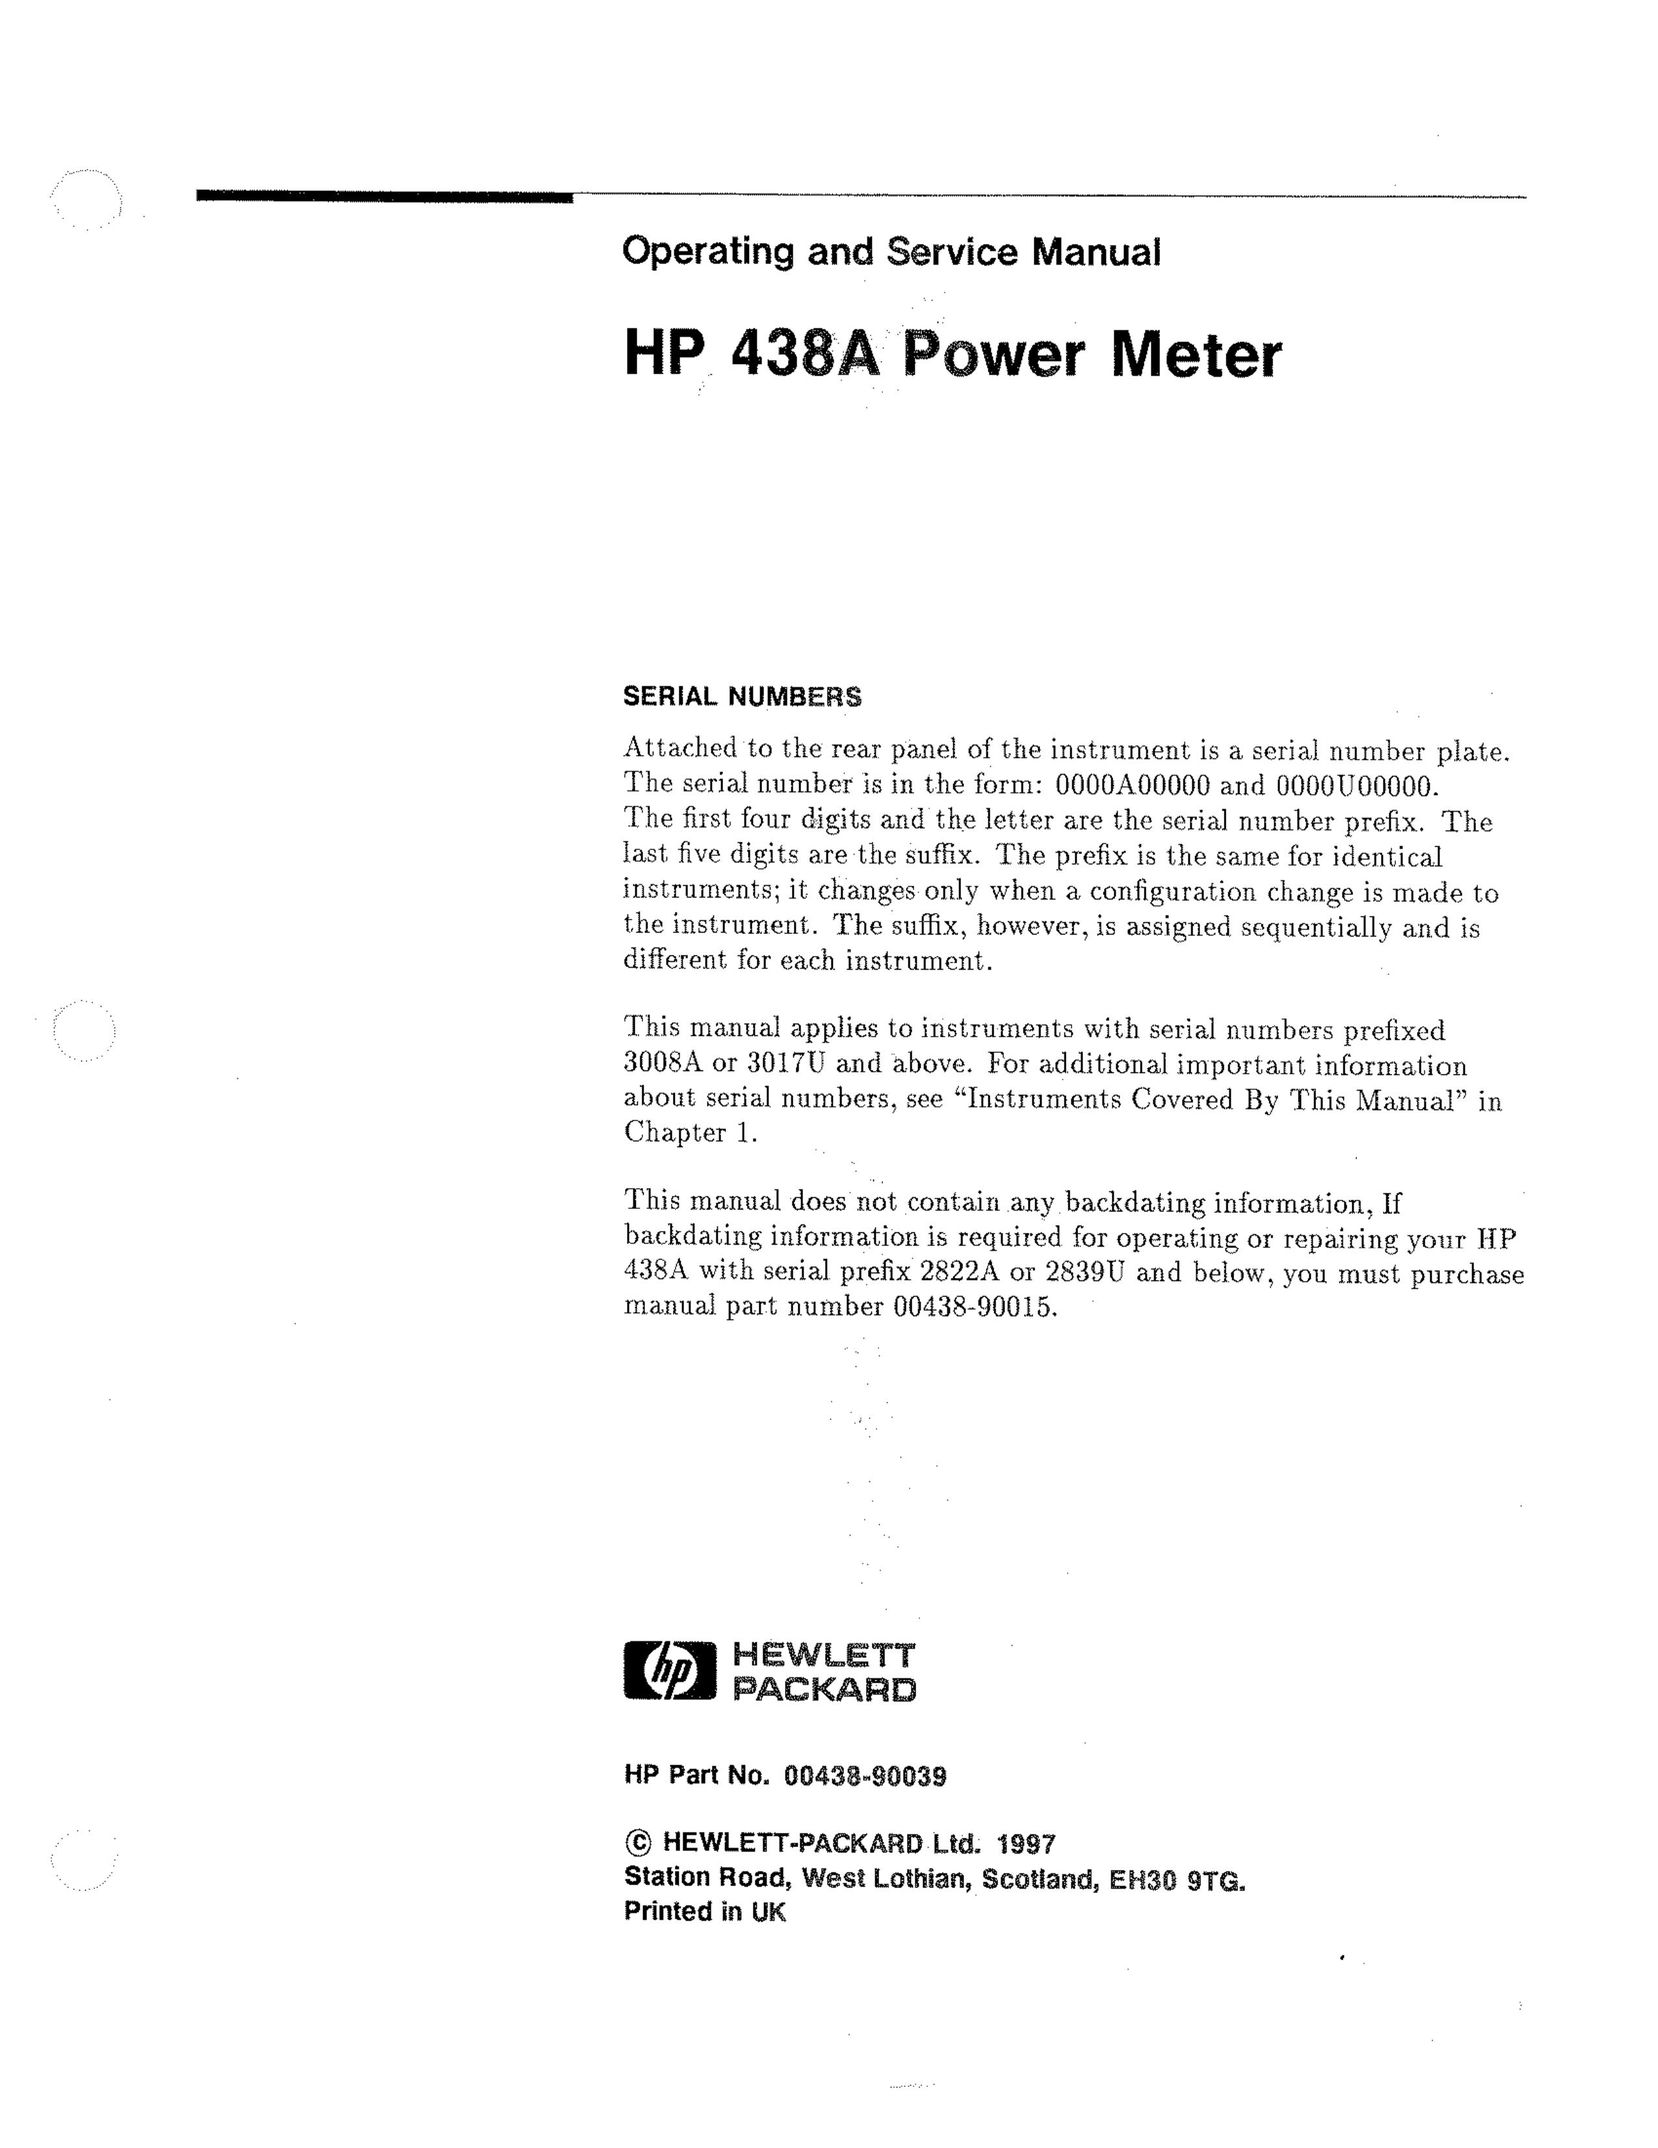 HP (Hewlett-Packard) 438A Saw User Manual